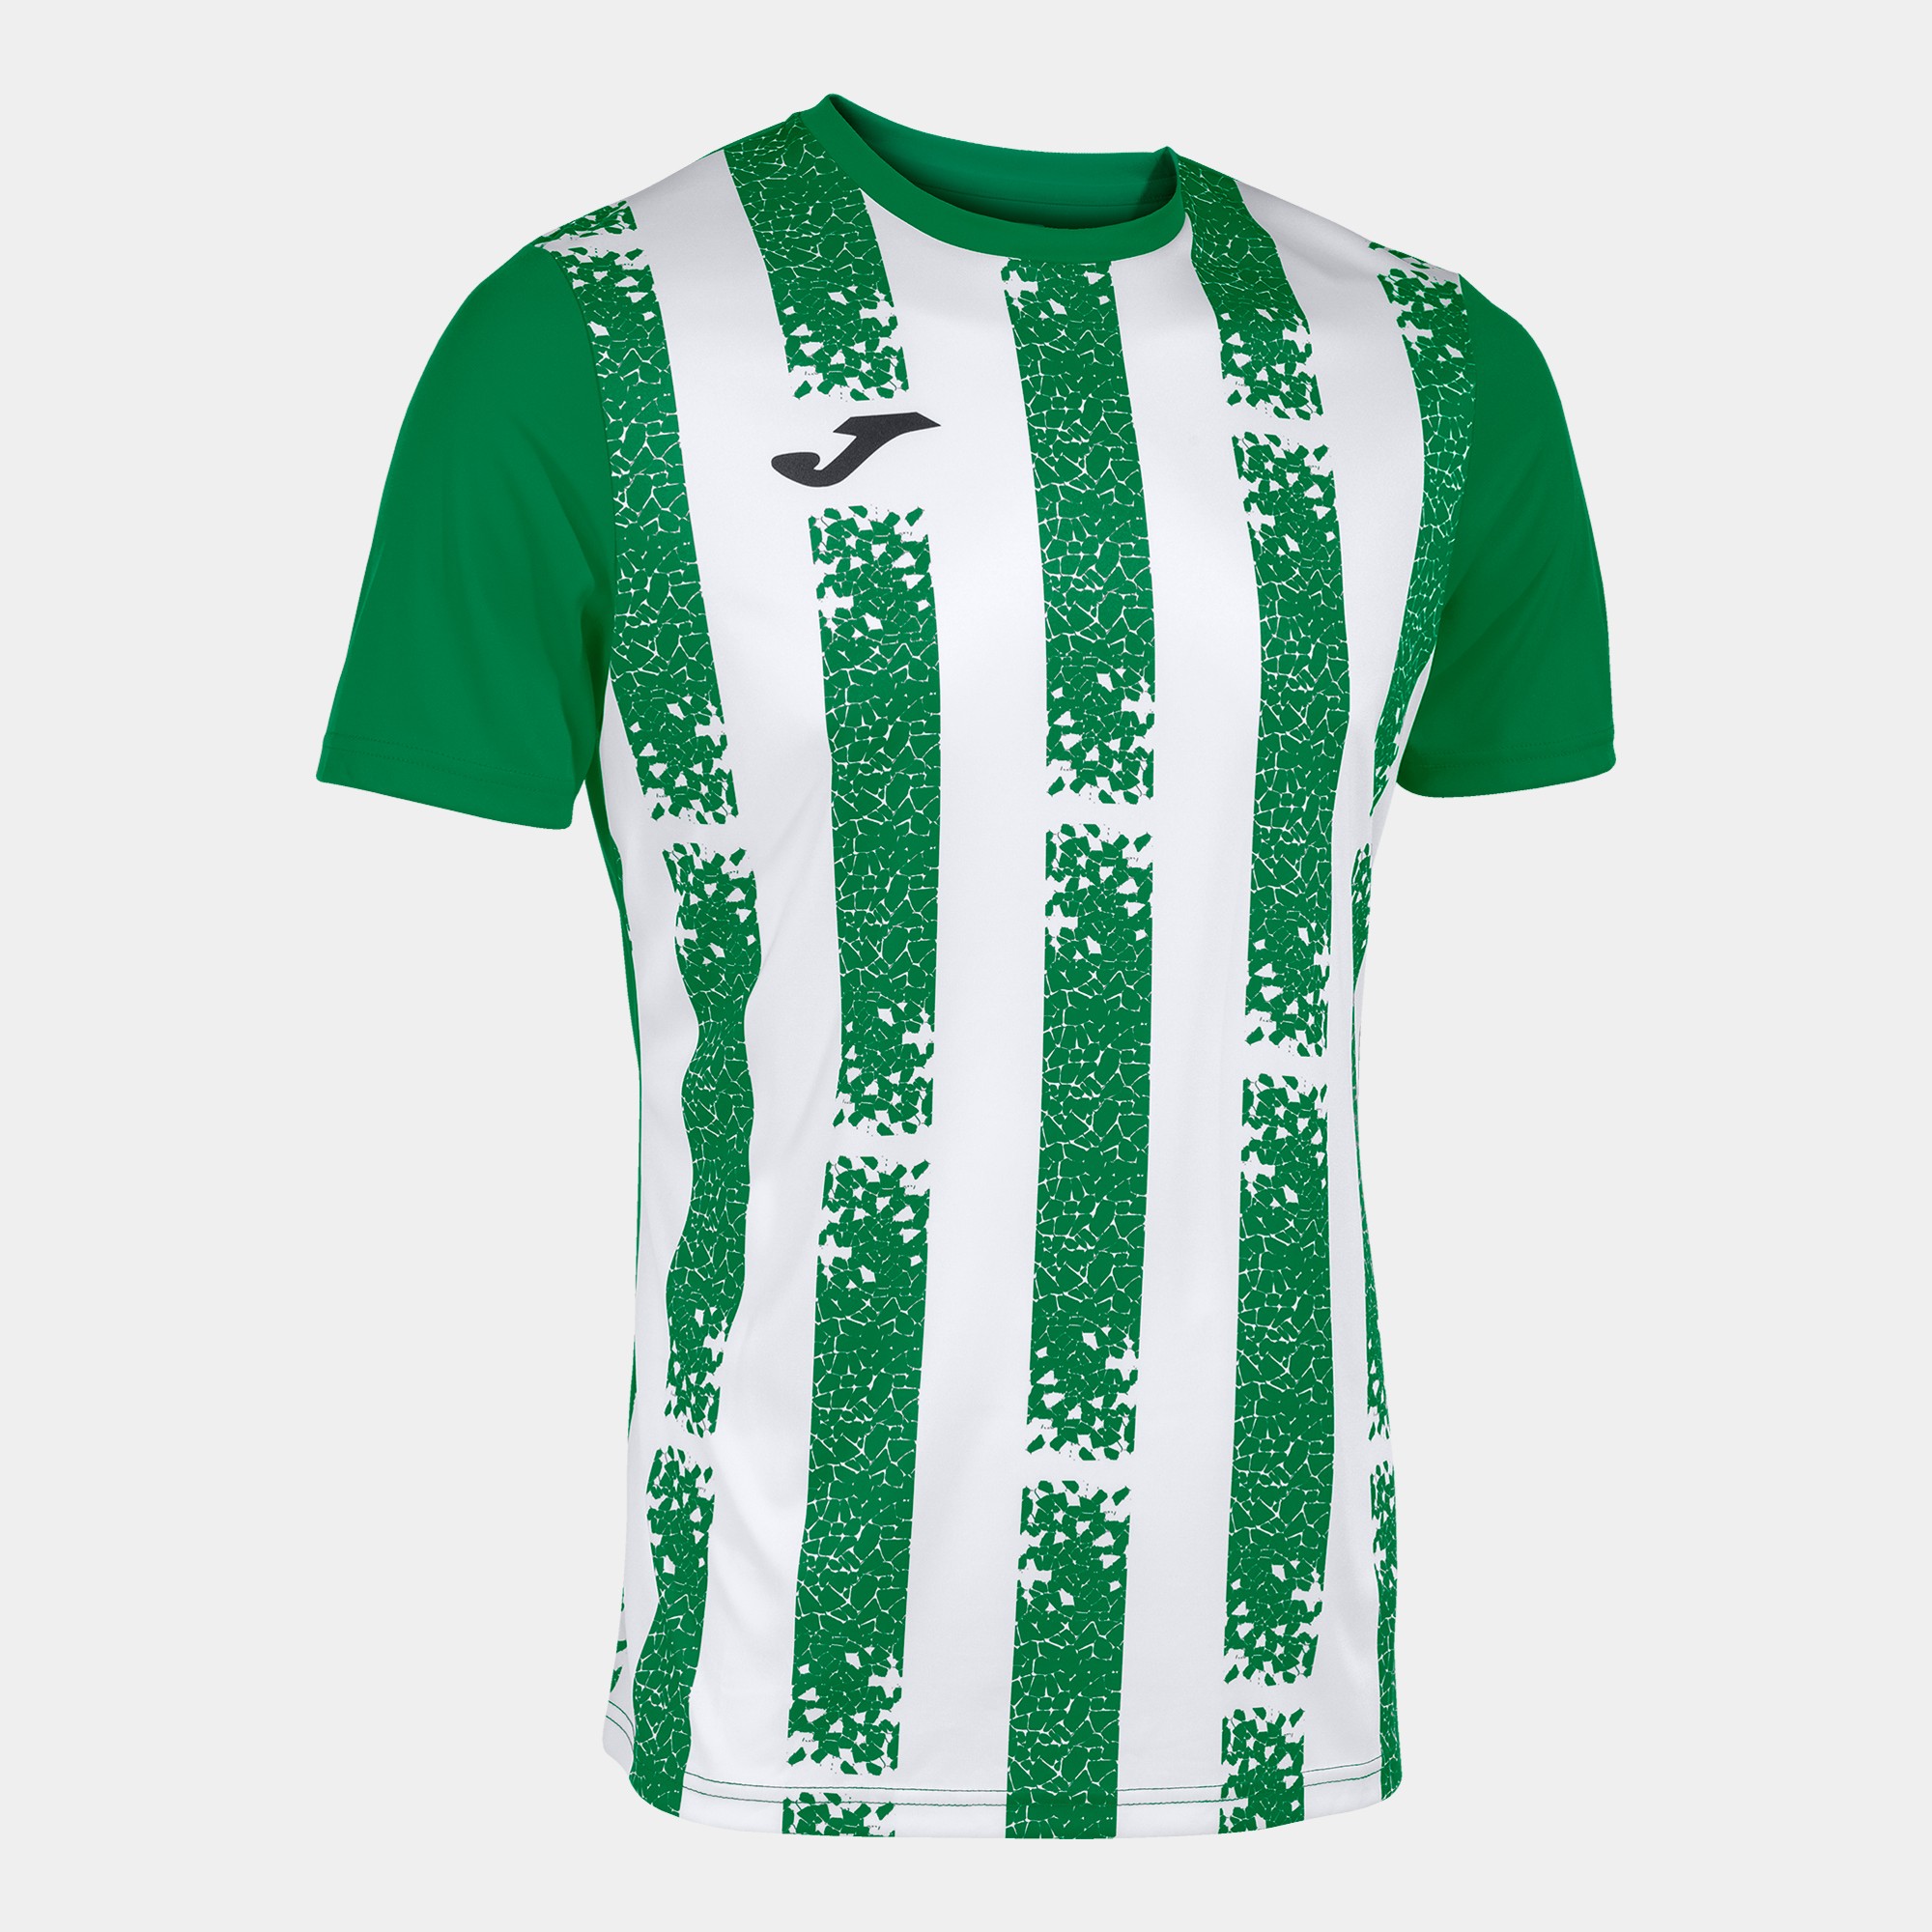 Camiseta Arbitro Joma verde